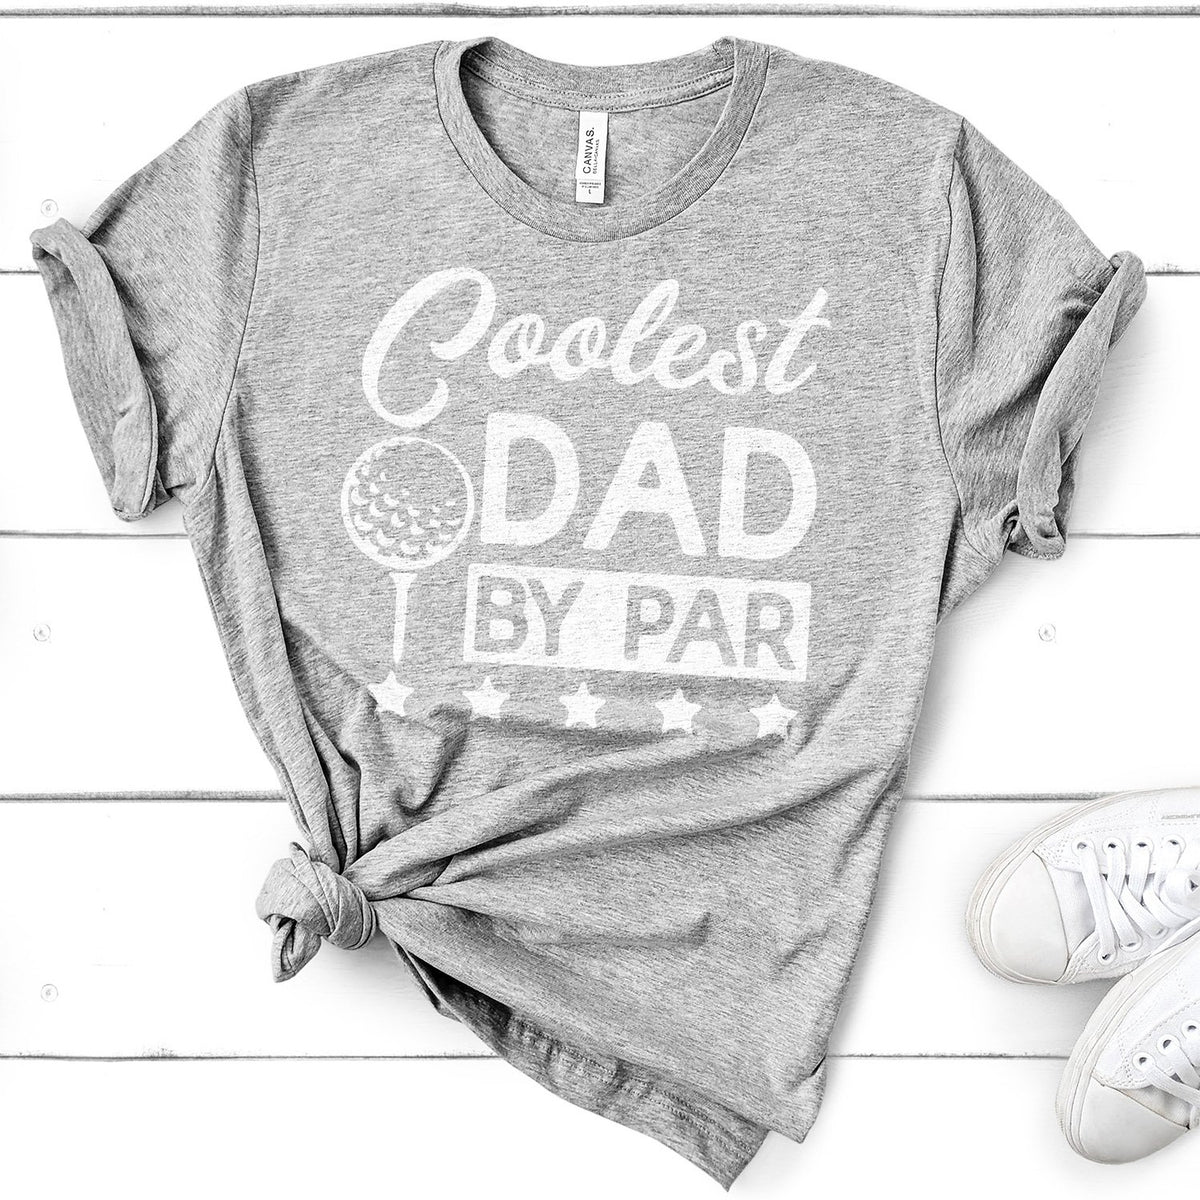 Coolest Dad By Par - Short Sleeve Tee Shirt